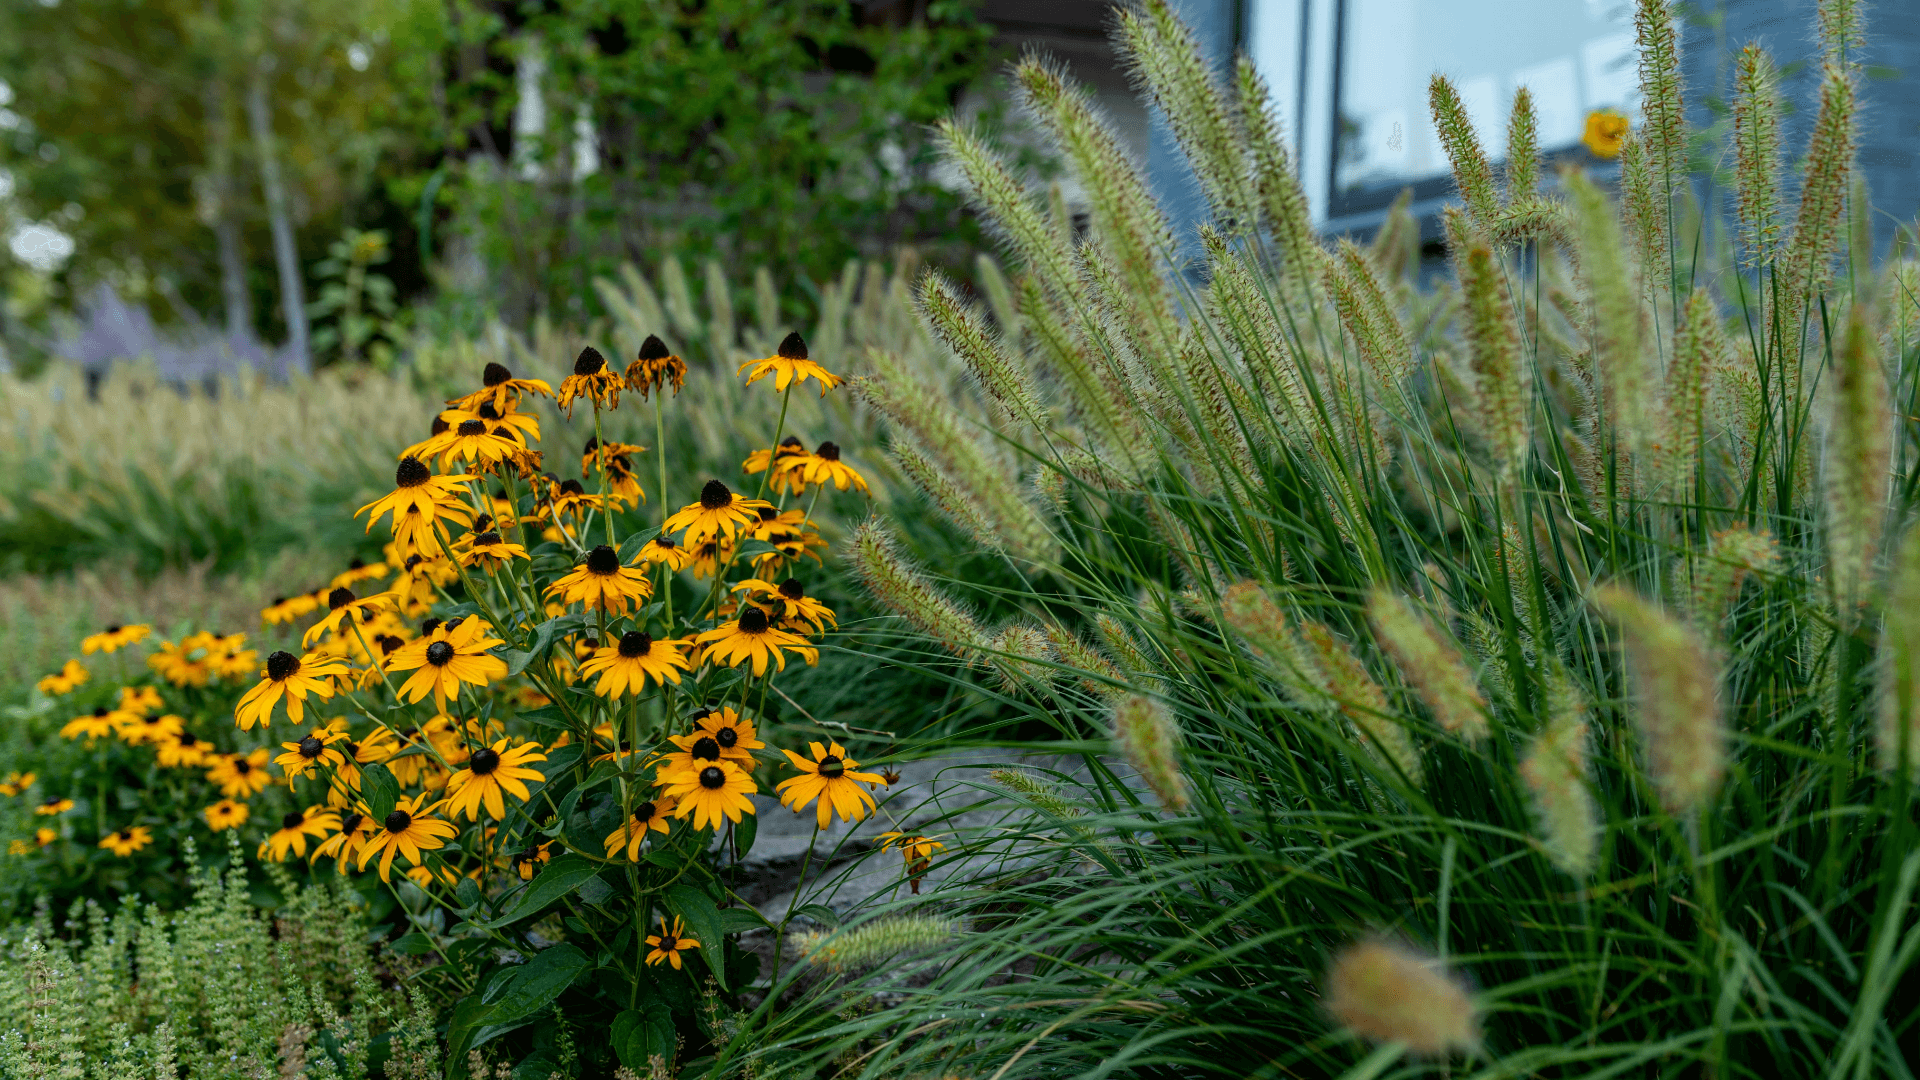 Native fountain grass next to yellow perennial flowers